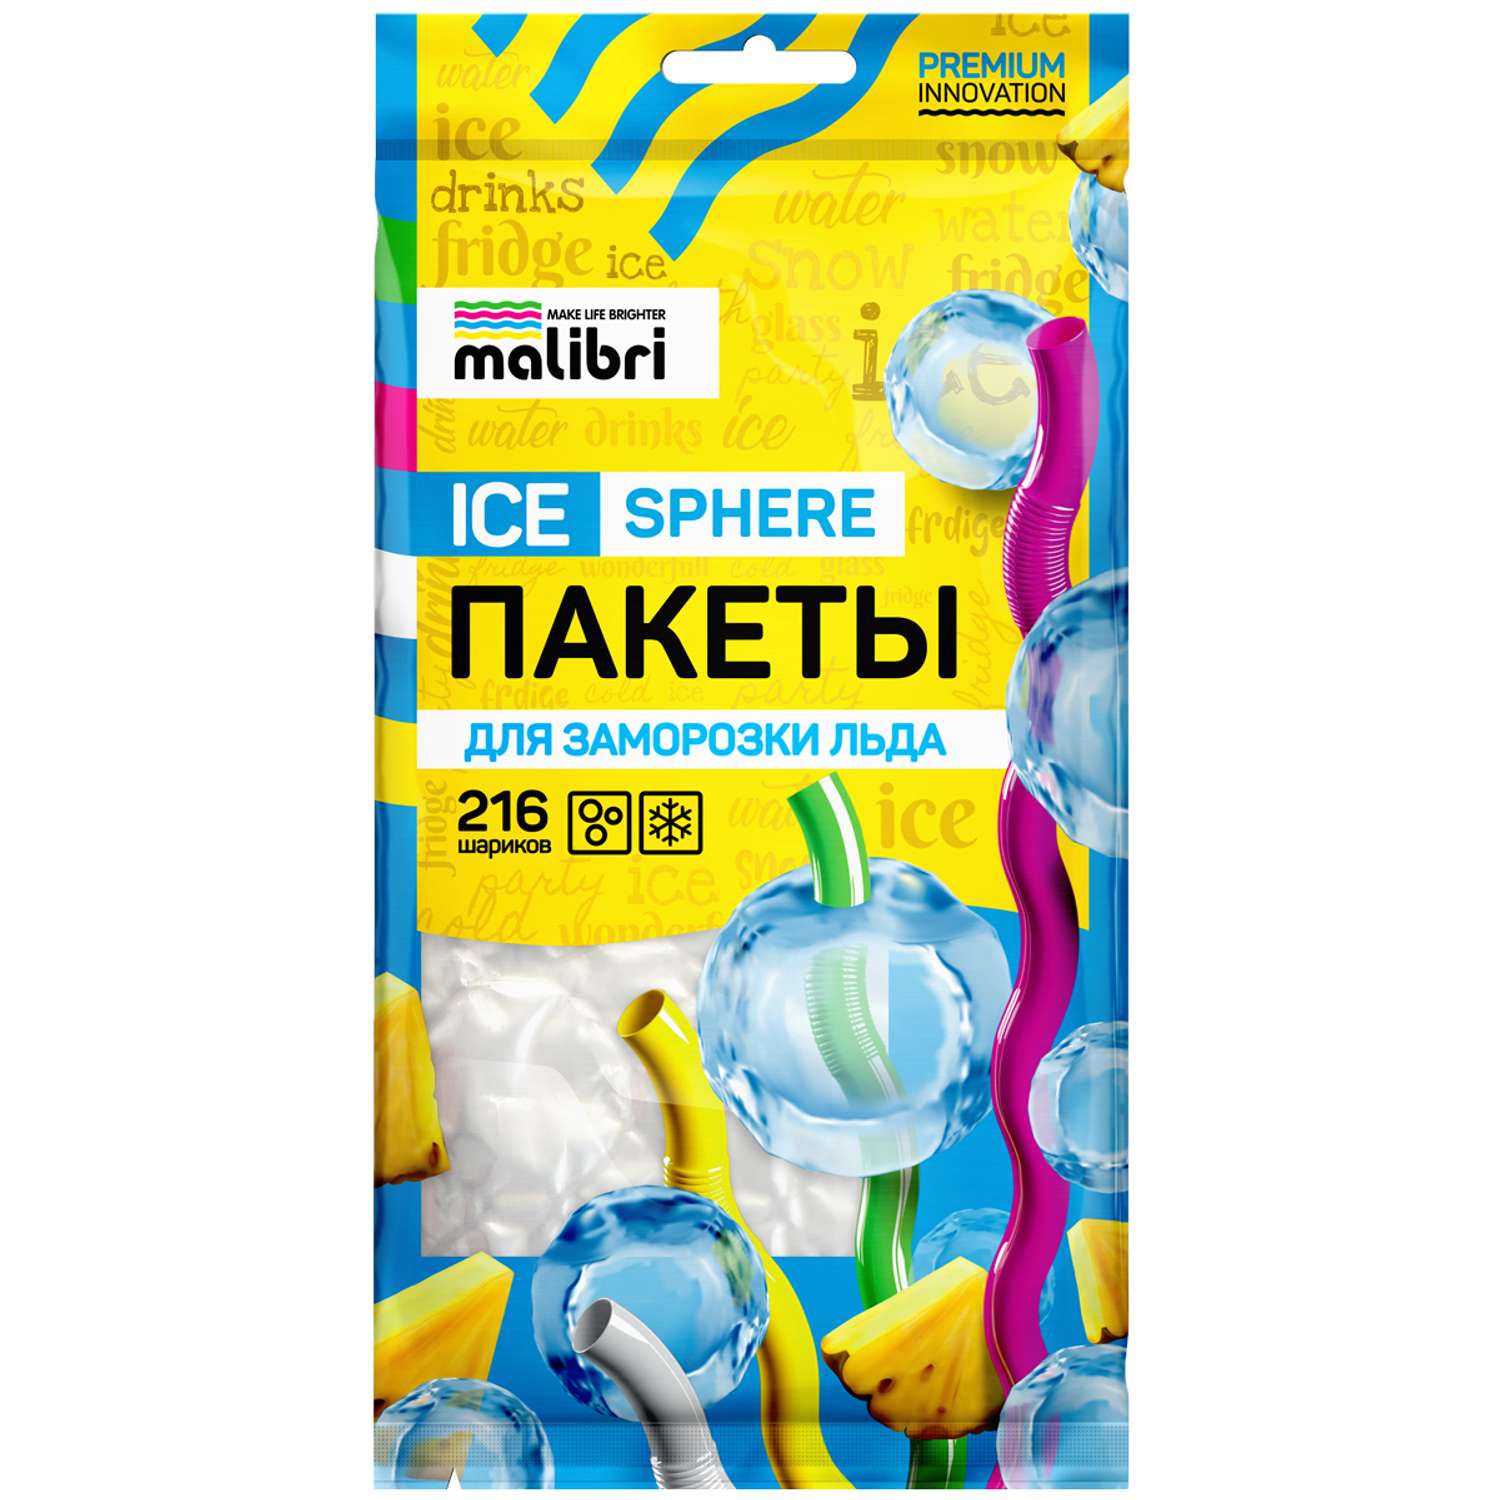 Пакеты для заморозки льда Malibri 216 шариков - фото 1